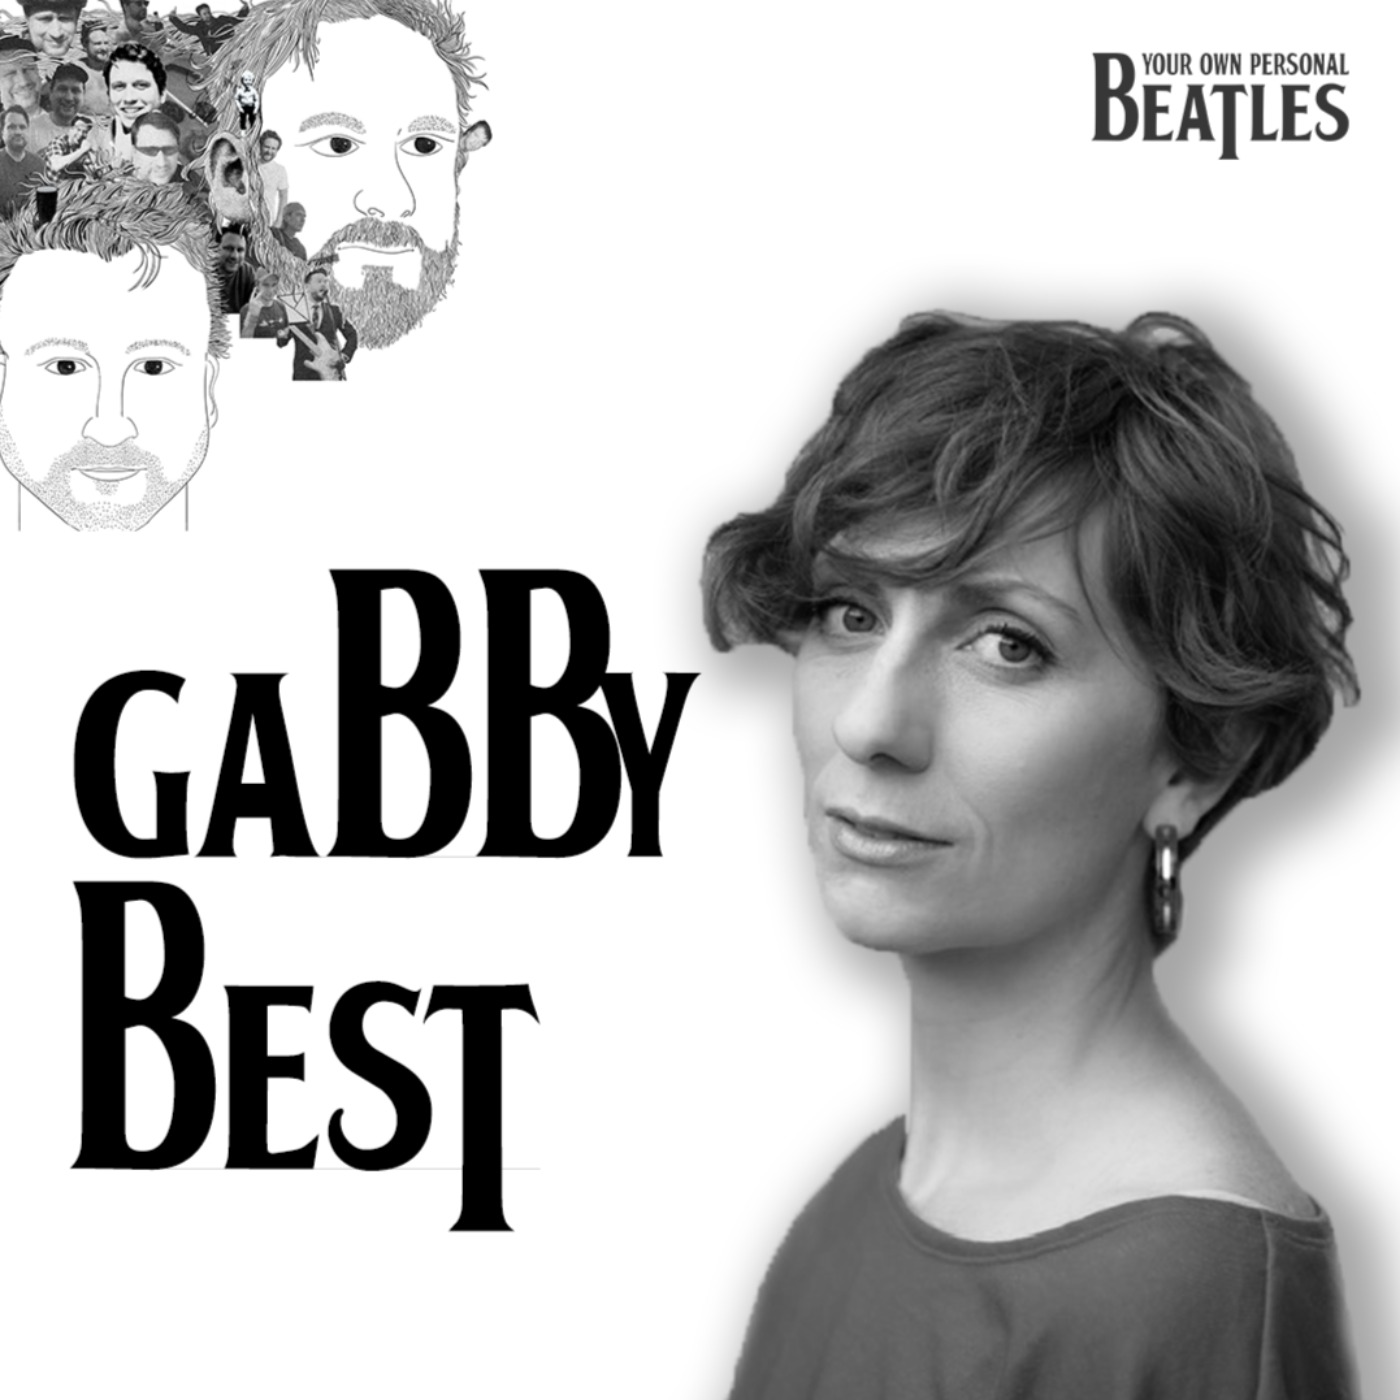 Gabby Best's Personal Beatles